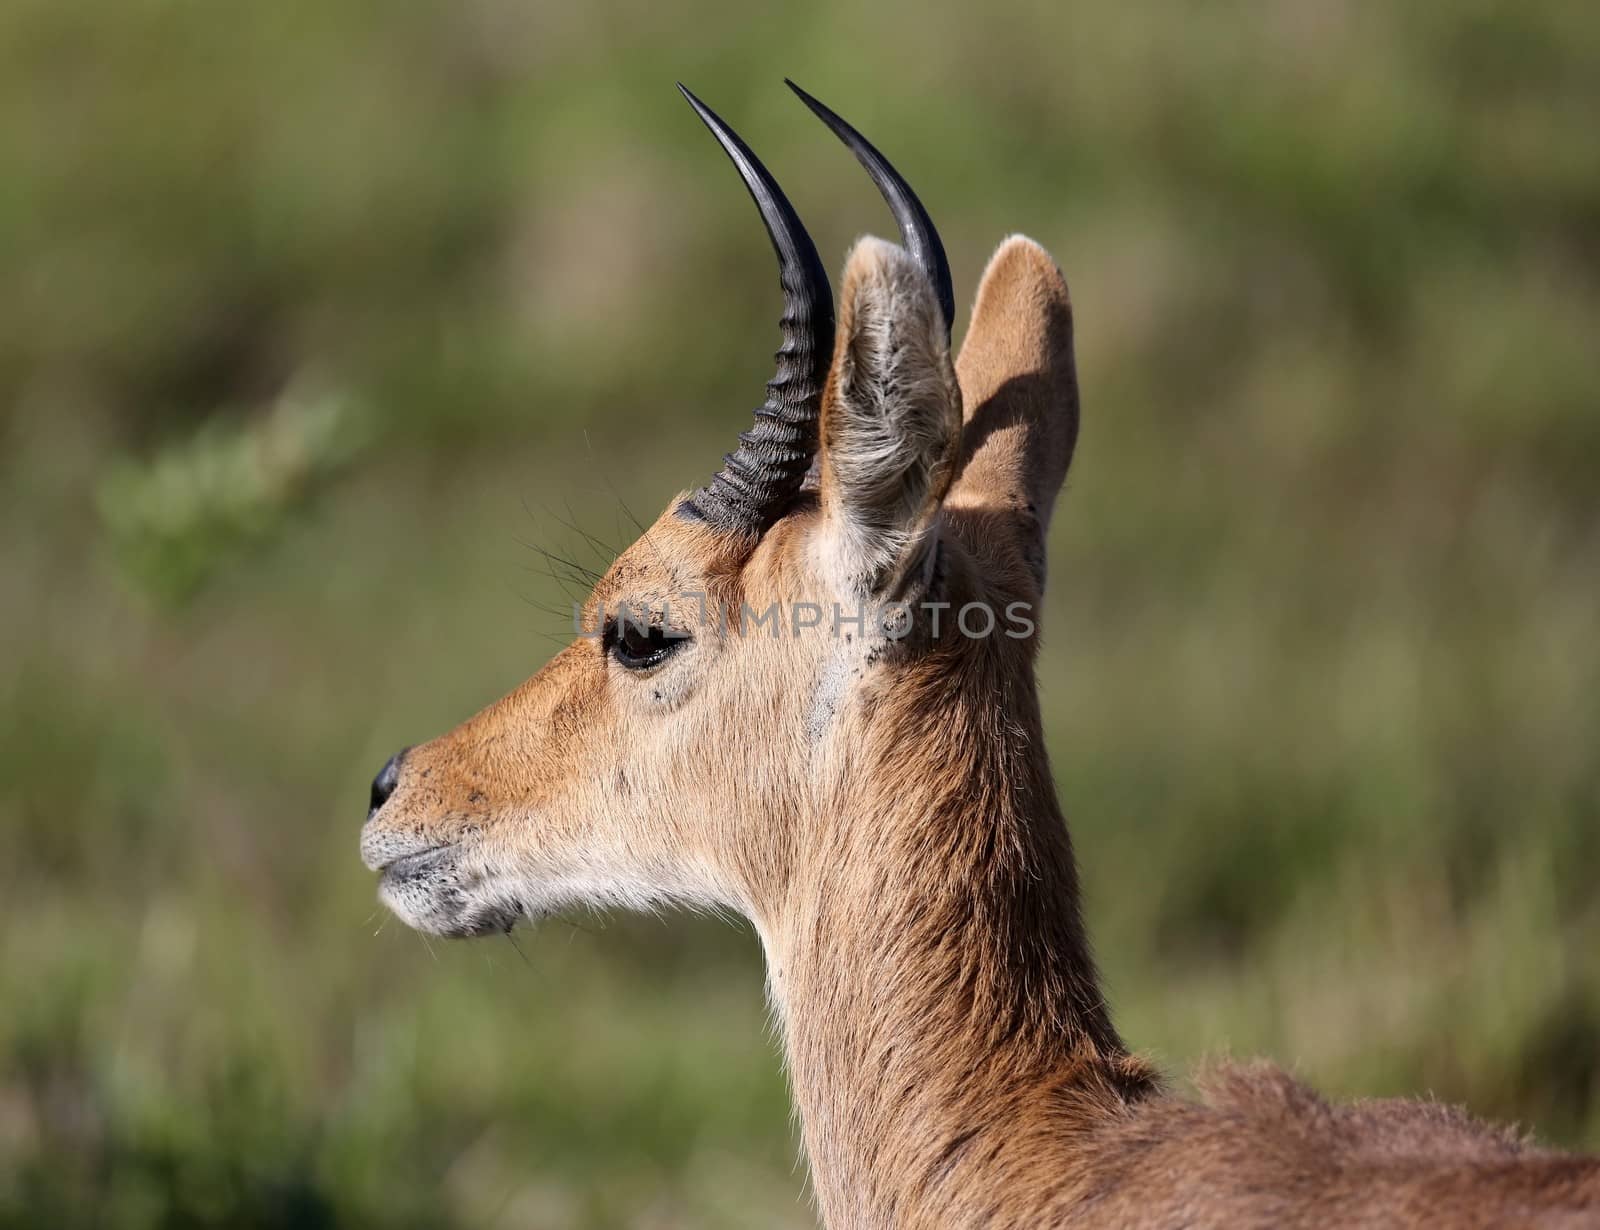 Mountain Reedbuck Antelope by fouroaks